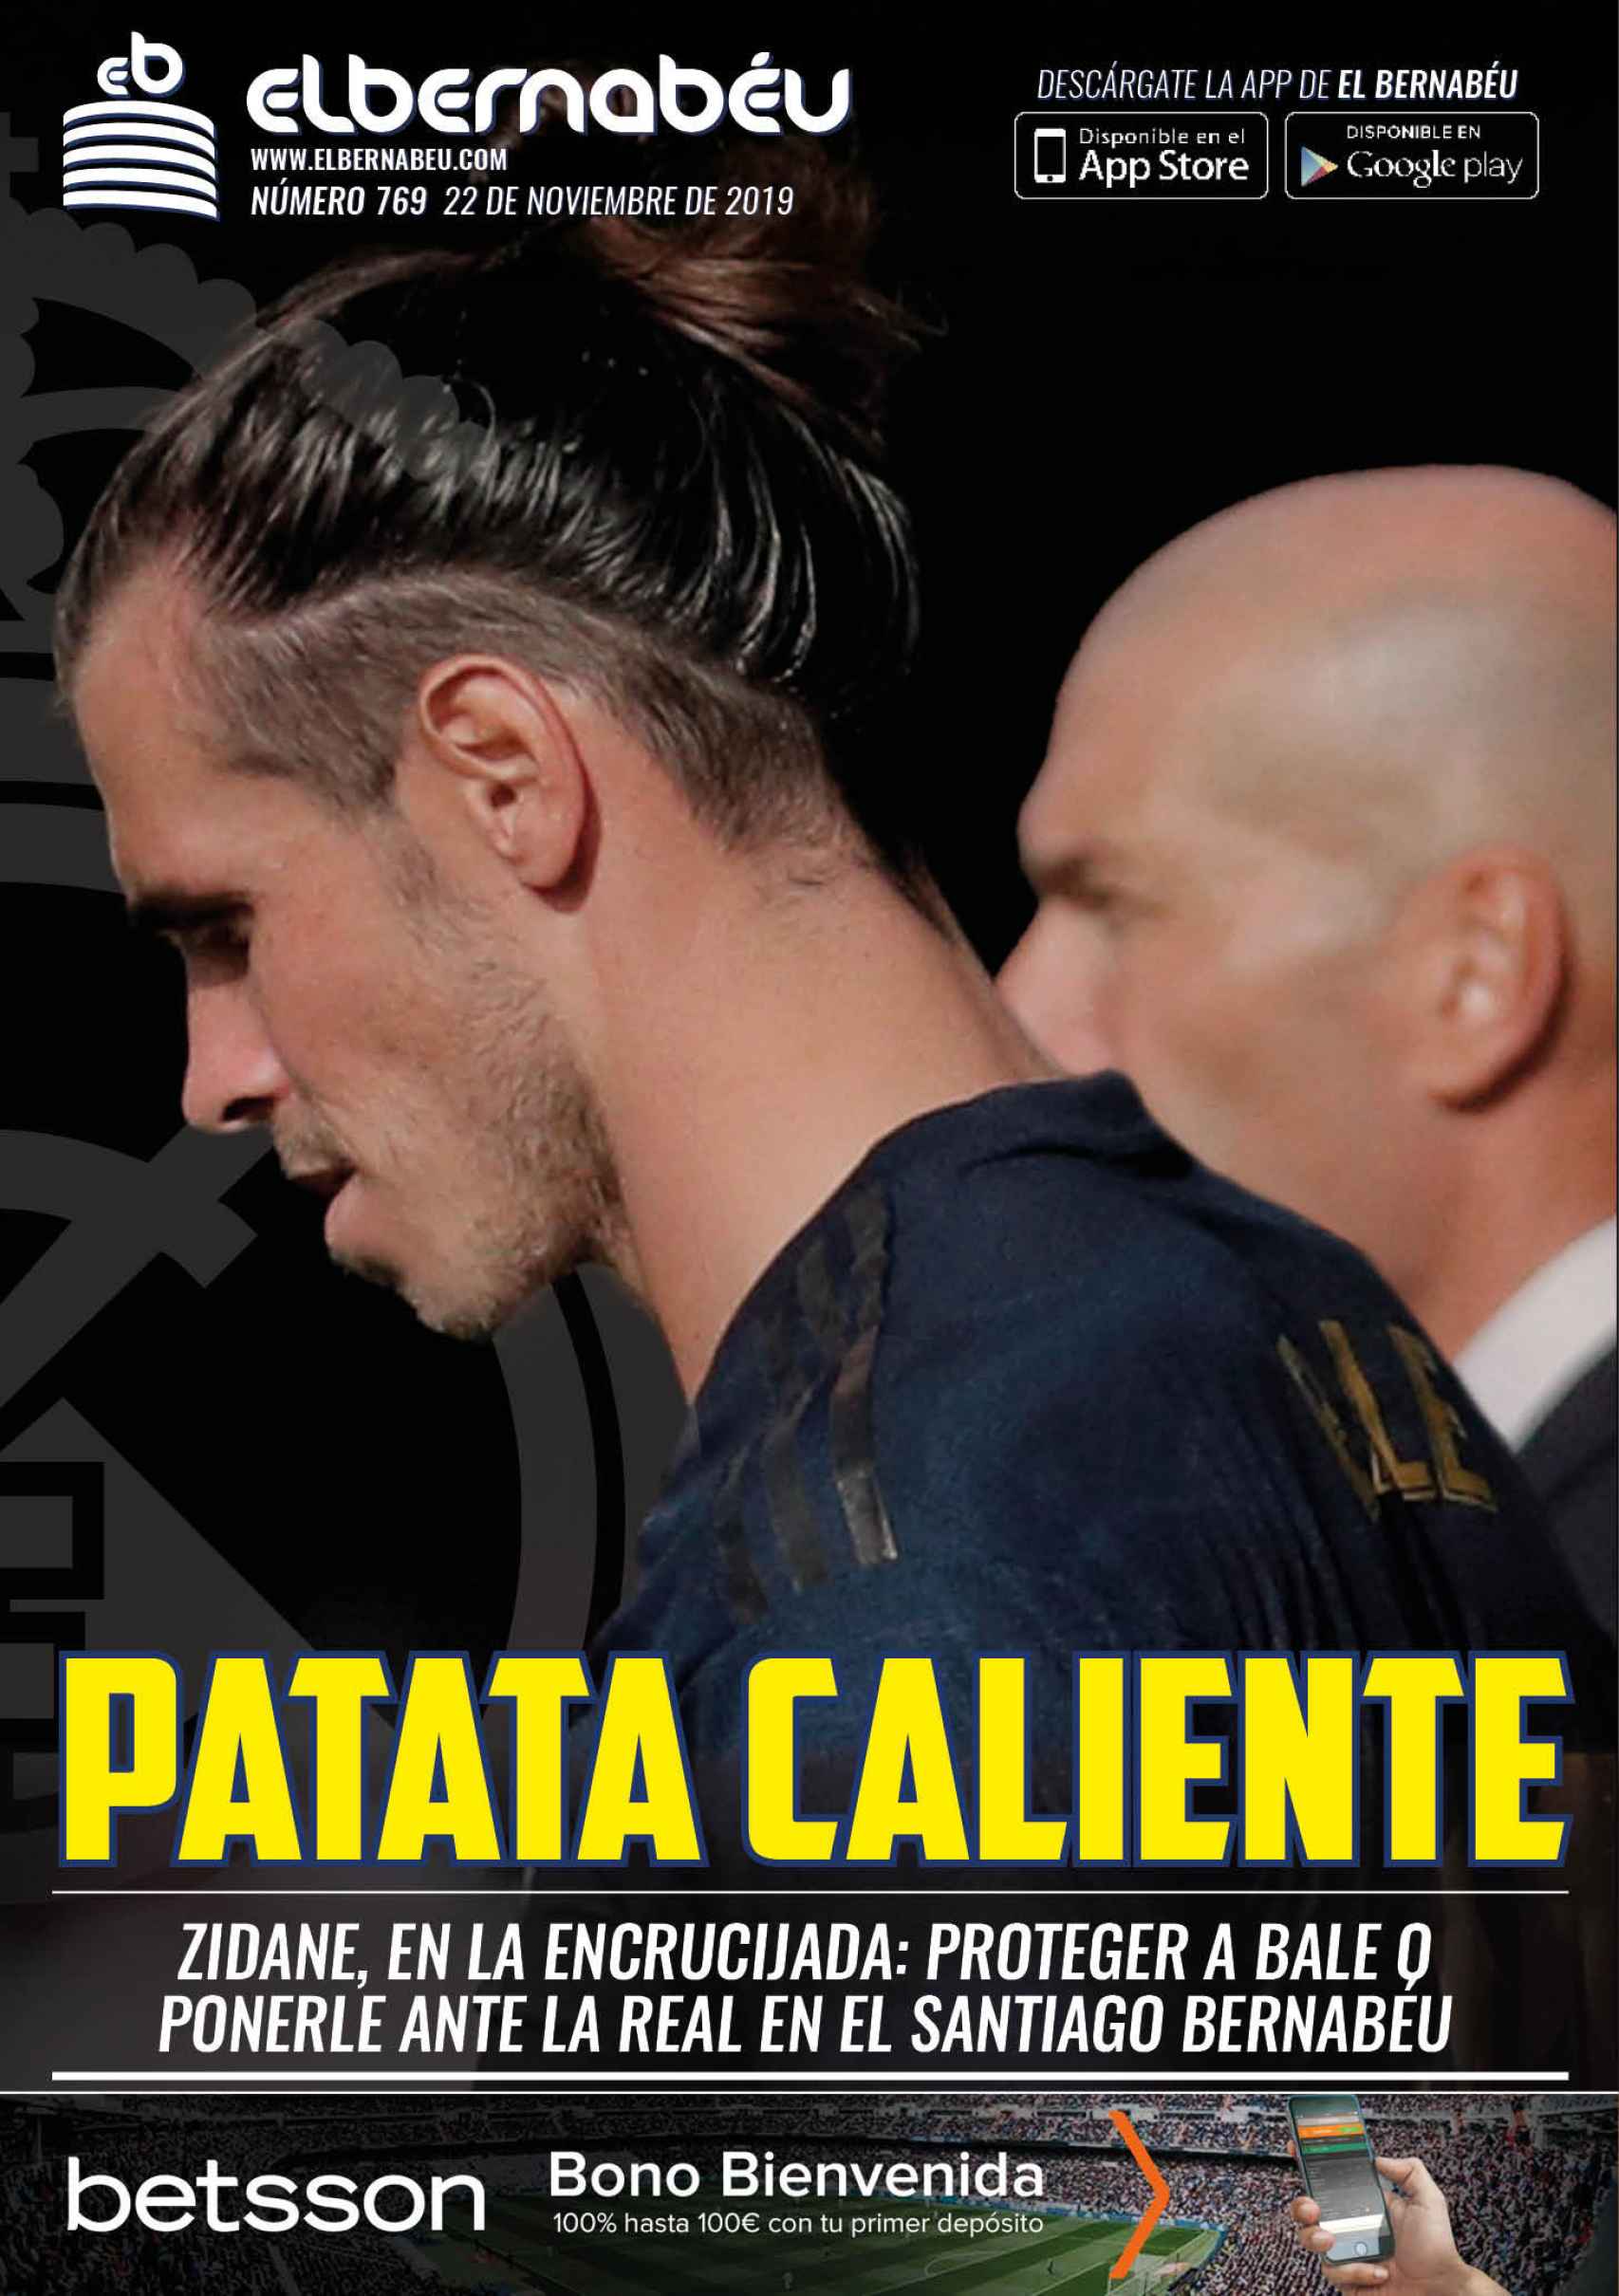 La portada de El Bernabéu (22/11/2019)